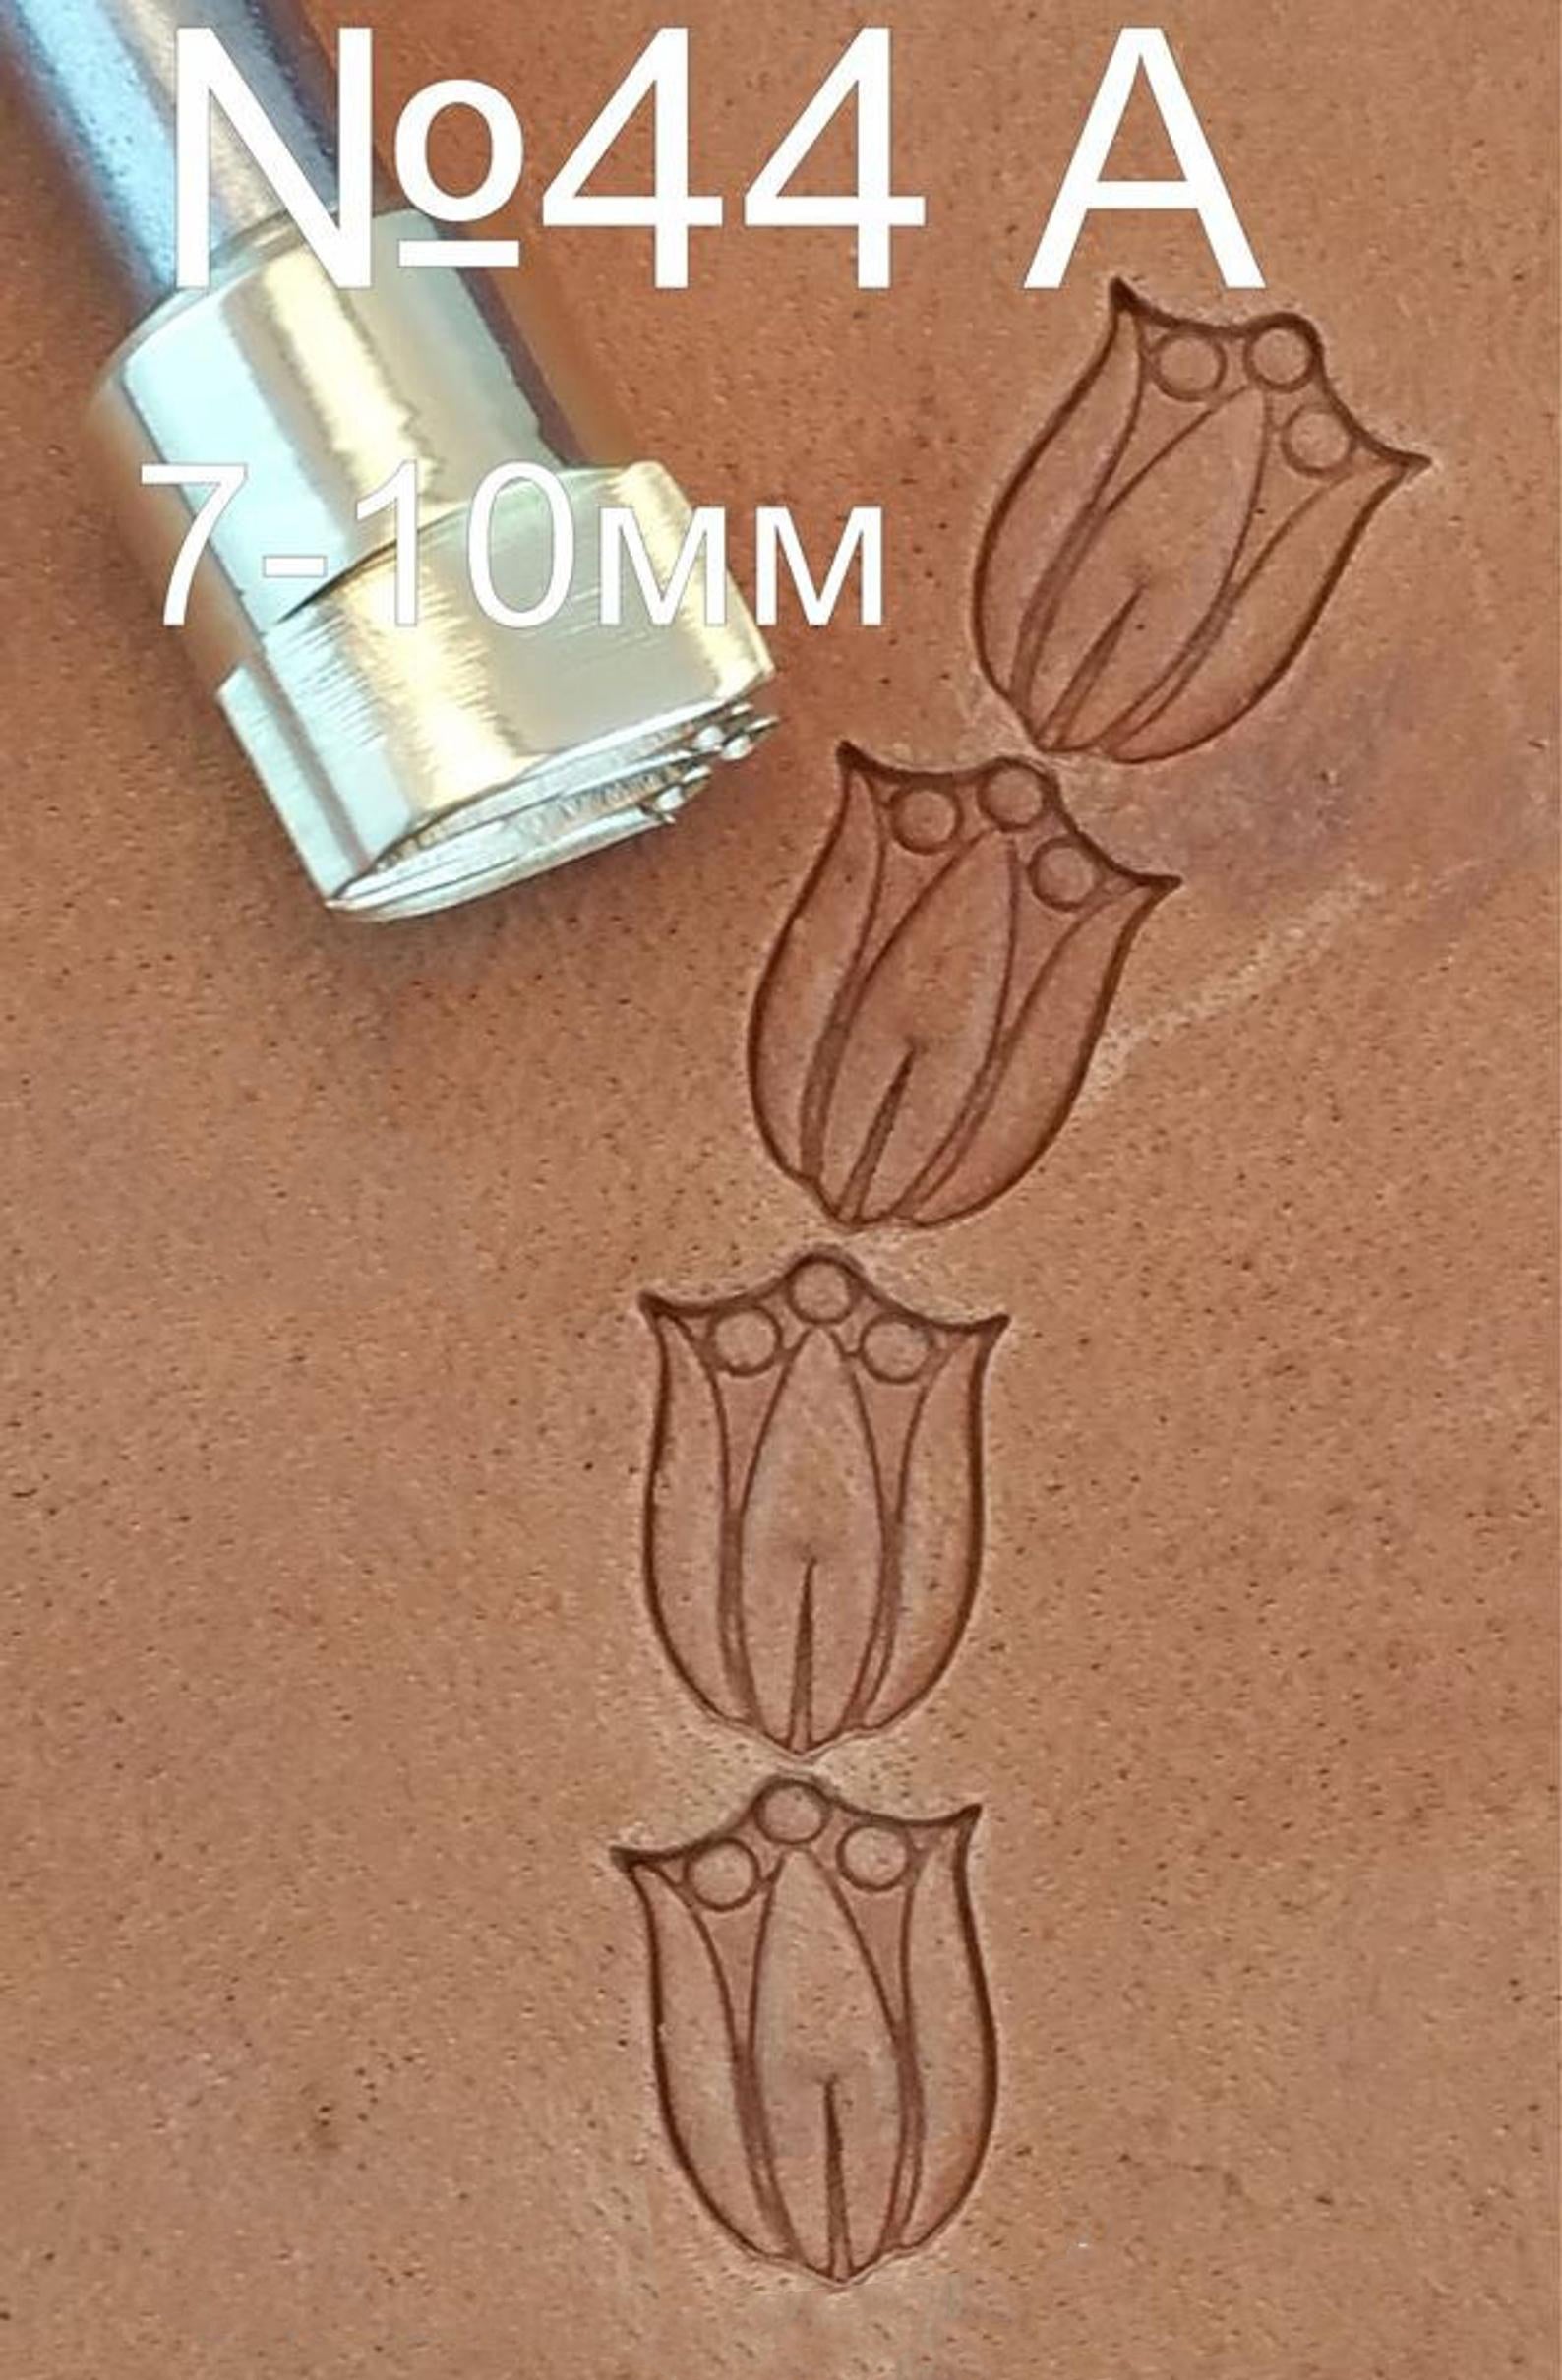 Leather stamp tool #44A - SpasGoranov